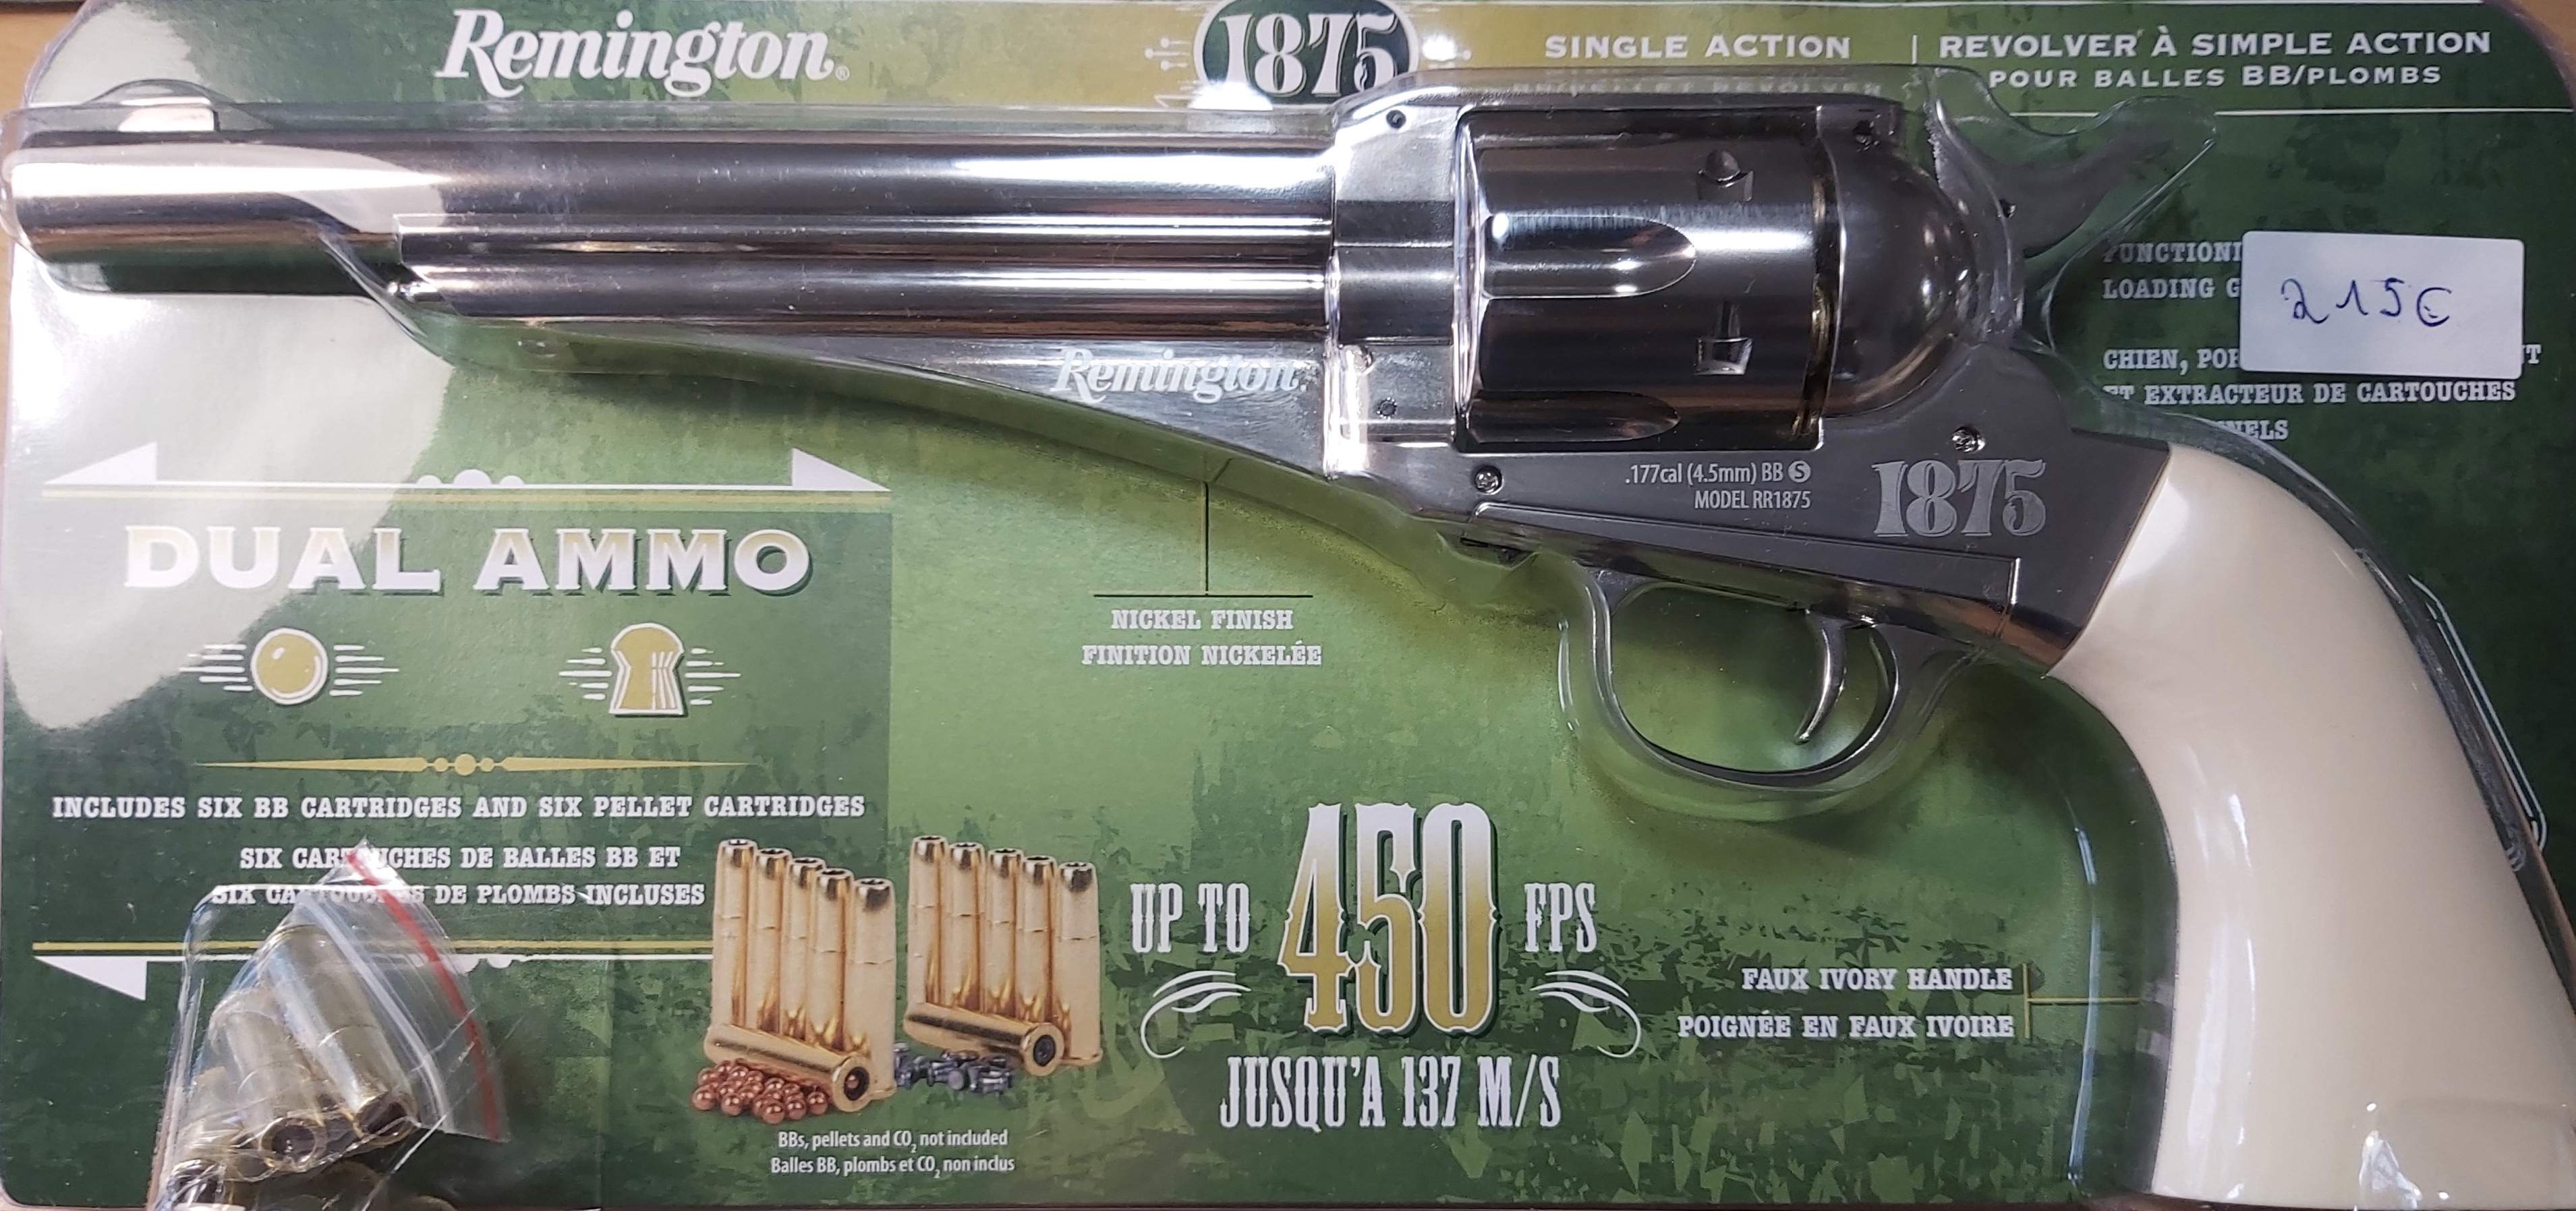 CO2 remington 1875, pellets & BB, Prijs 215€